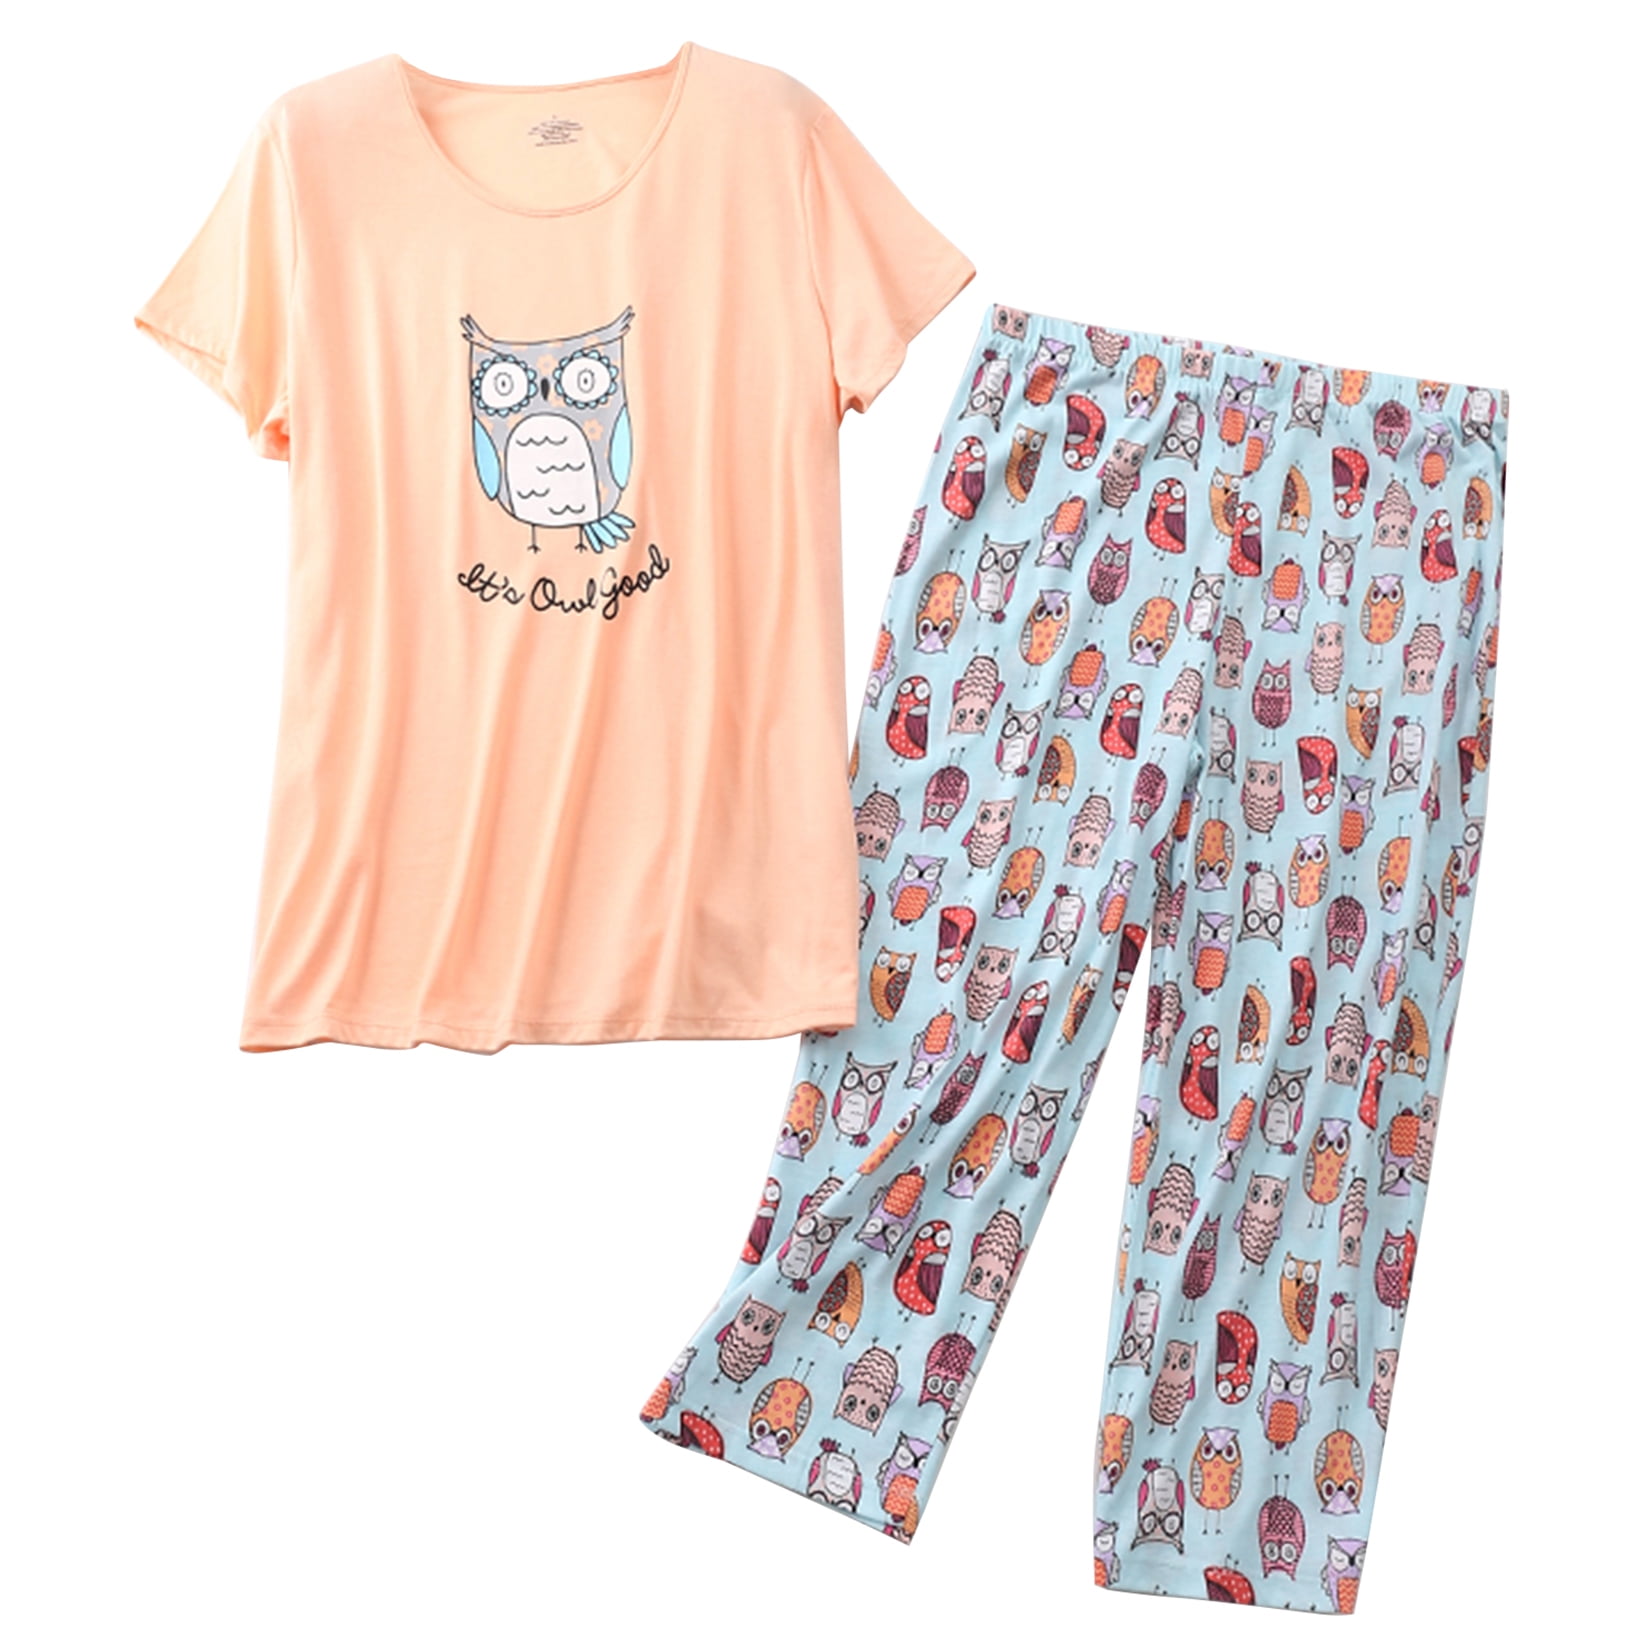 Lu's Chic Women's Capri Pajama Set Cotton Sleepwear Short Sleeve Pjs ...